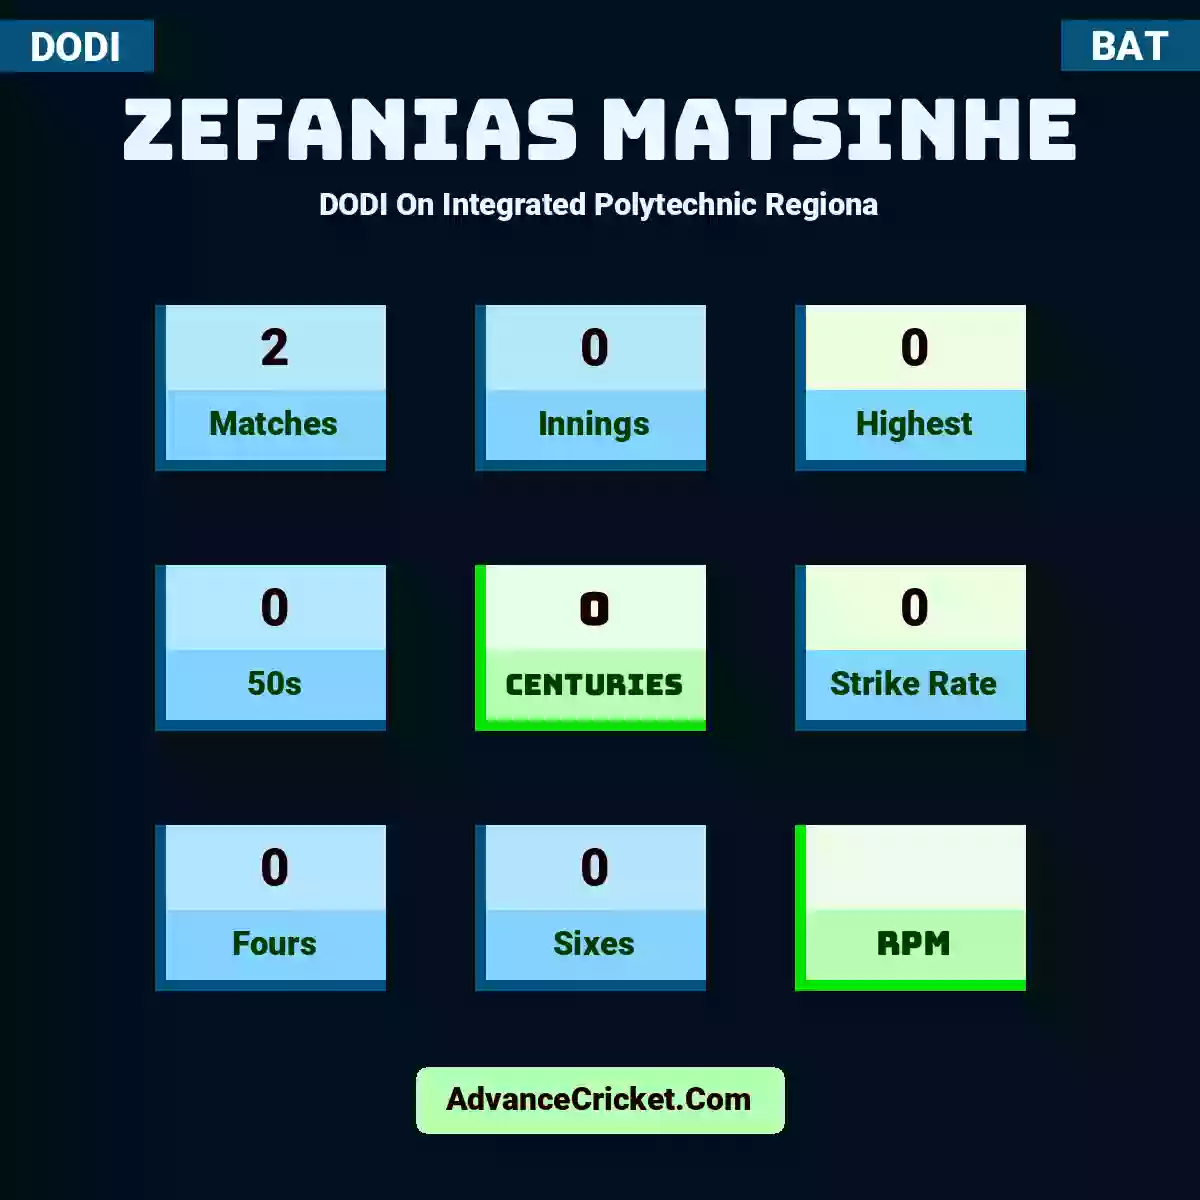 Zefanias Matsinhe DODI  On Integrated Polytechnic Regiona, Zefanias Matsinhe played 2 matches, scored 0 runs as highest, 0 half-centuries, and 0 centuries, with a strike rate of 0. Z.Matsinhe hit 0 fours and 0 sixes.